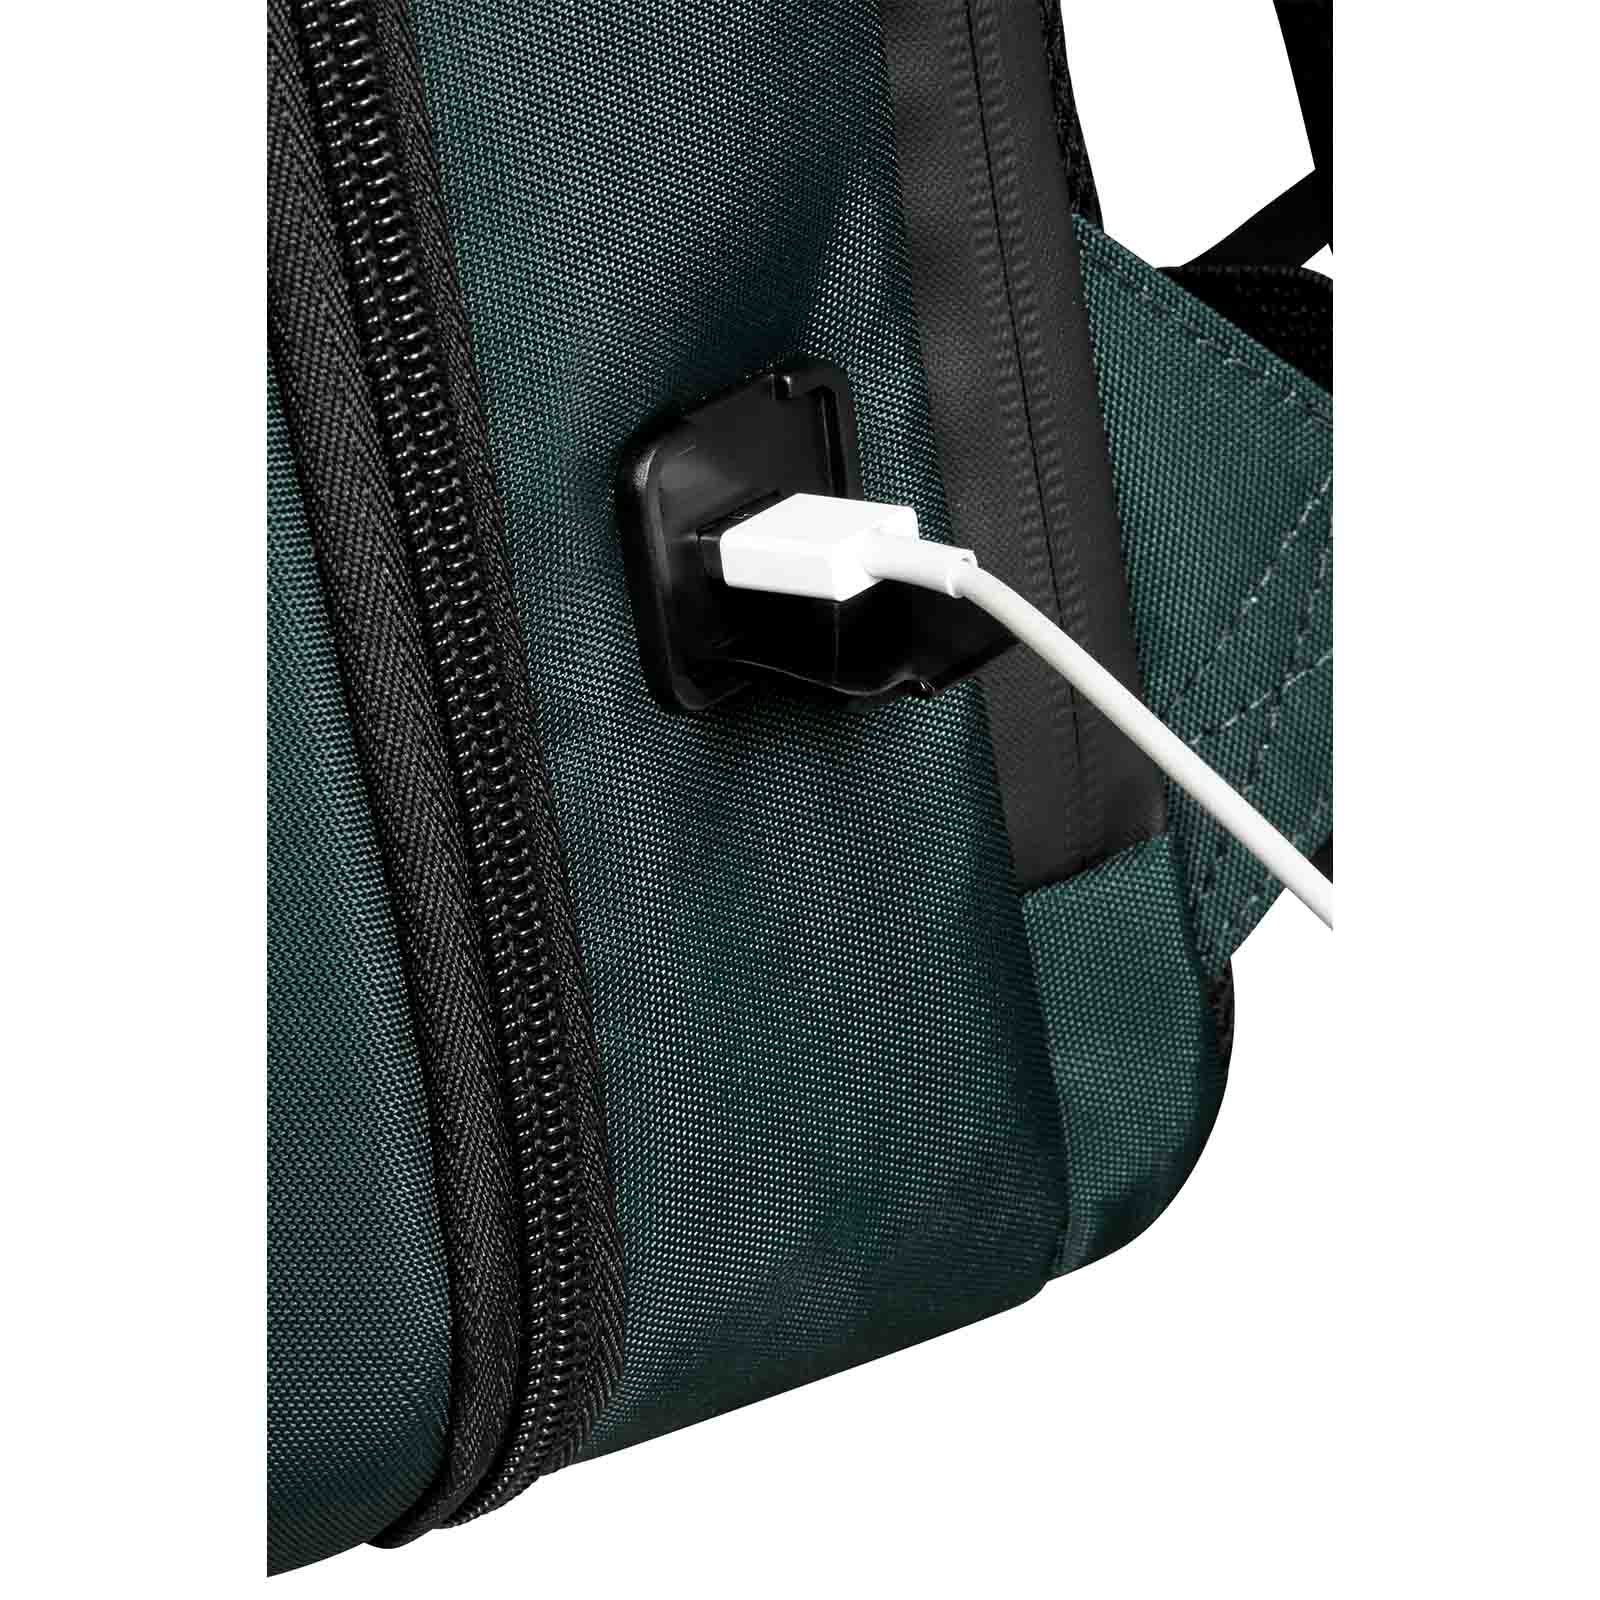 Samsonite-Litepoint-15-Inch-Laptop-Backpack-Urban-Green-USB-Port